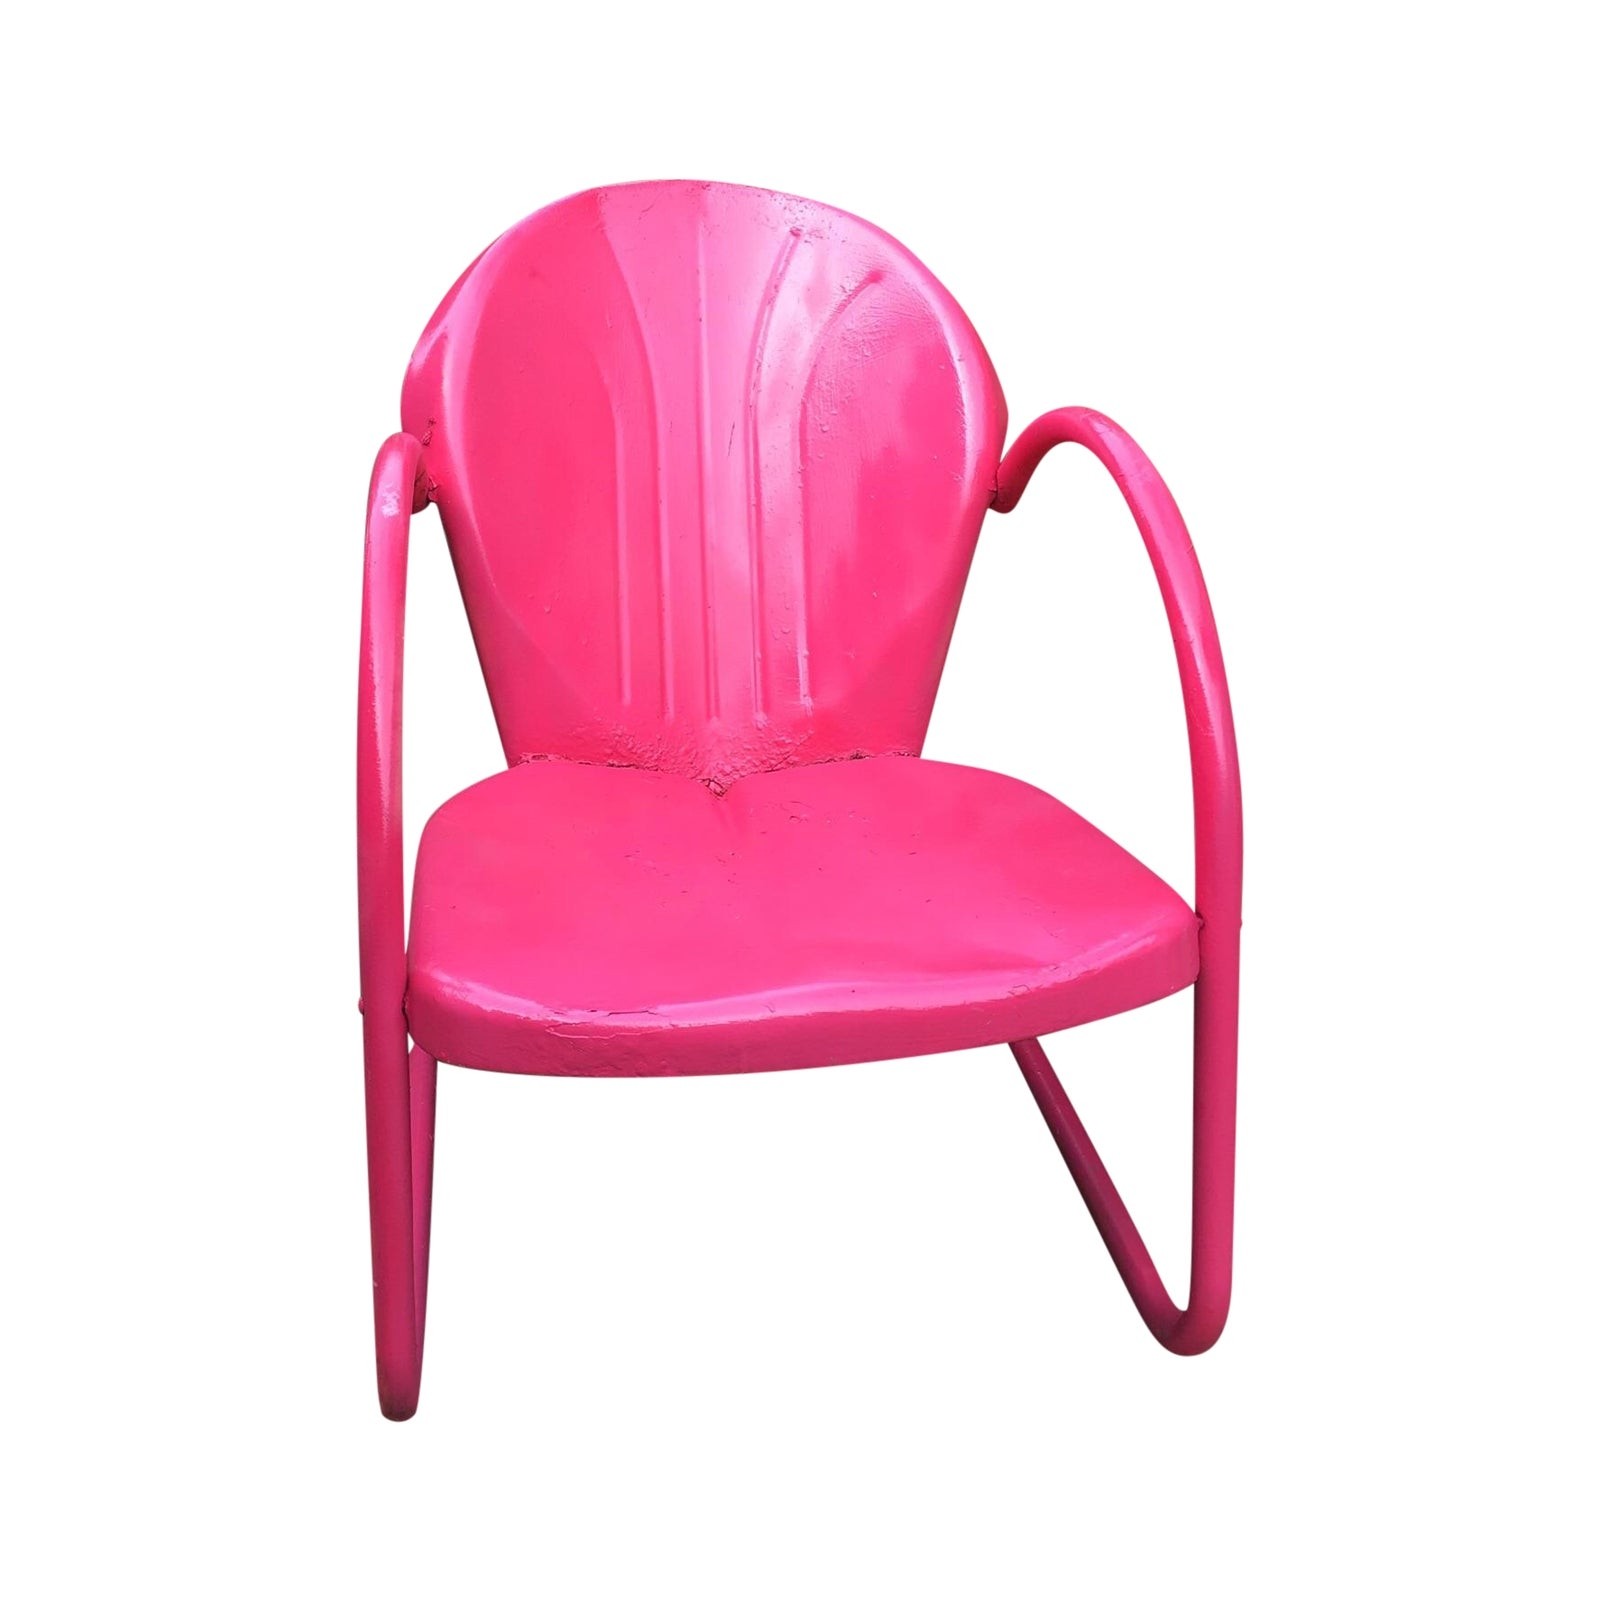 Mid century pink metal patio chair chairish